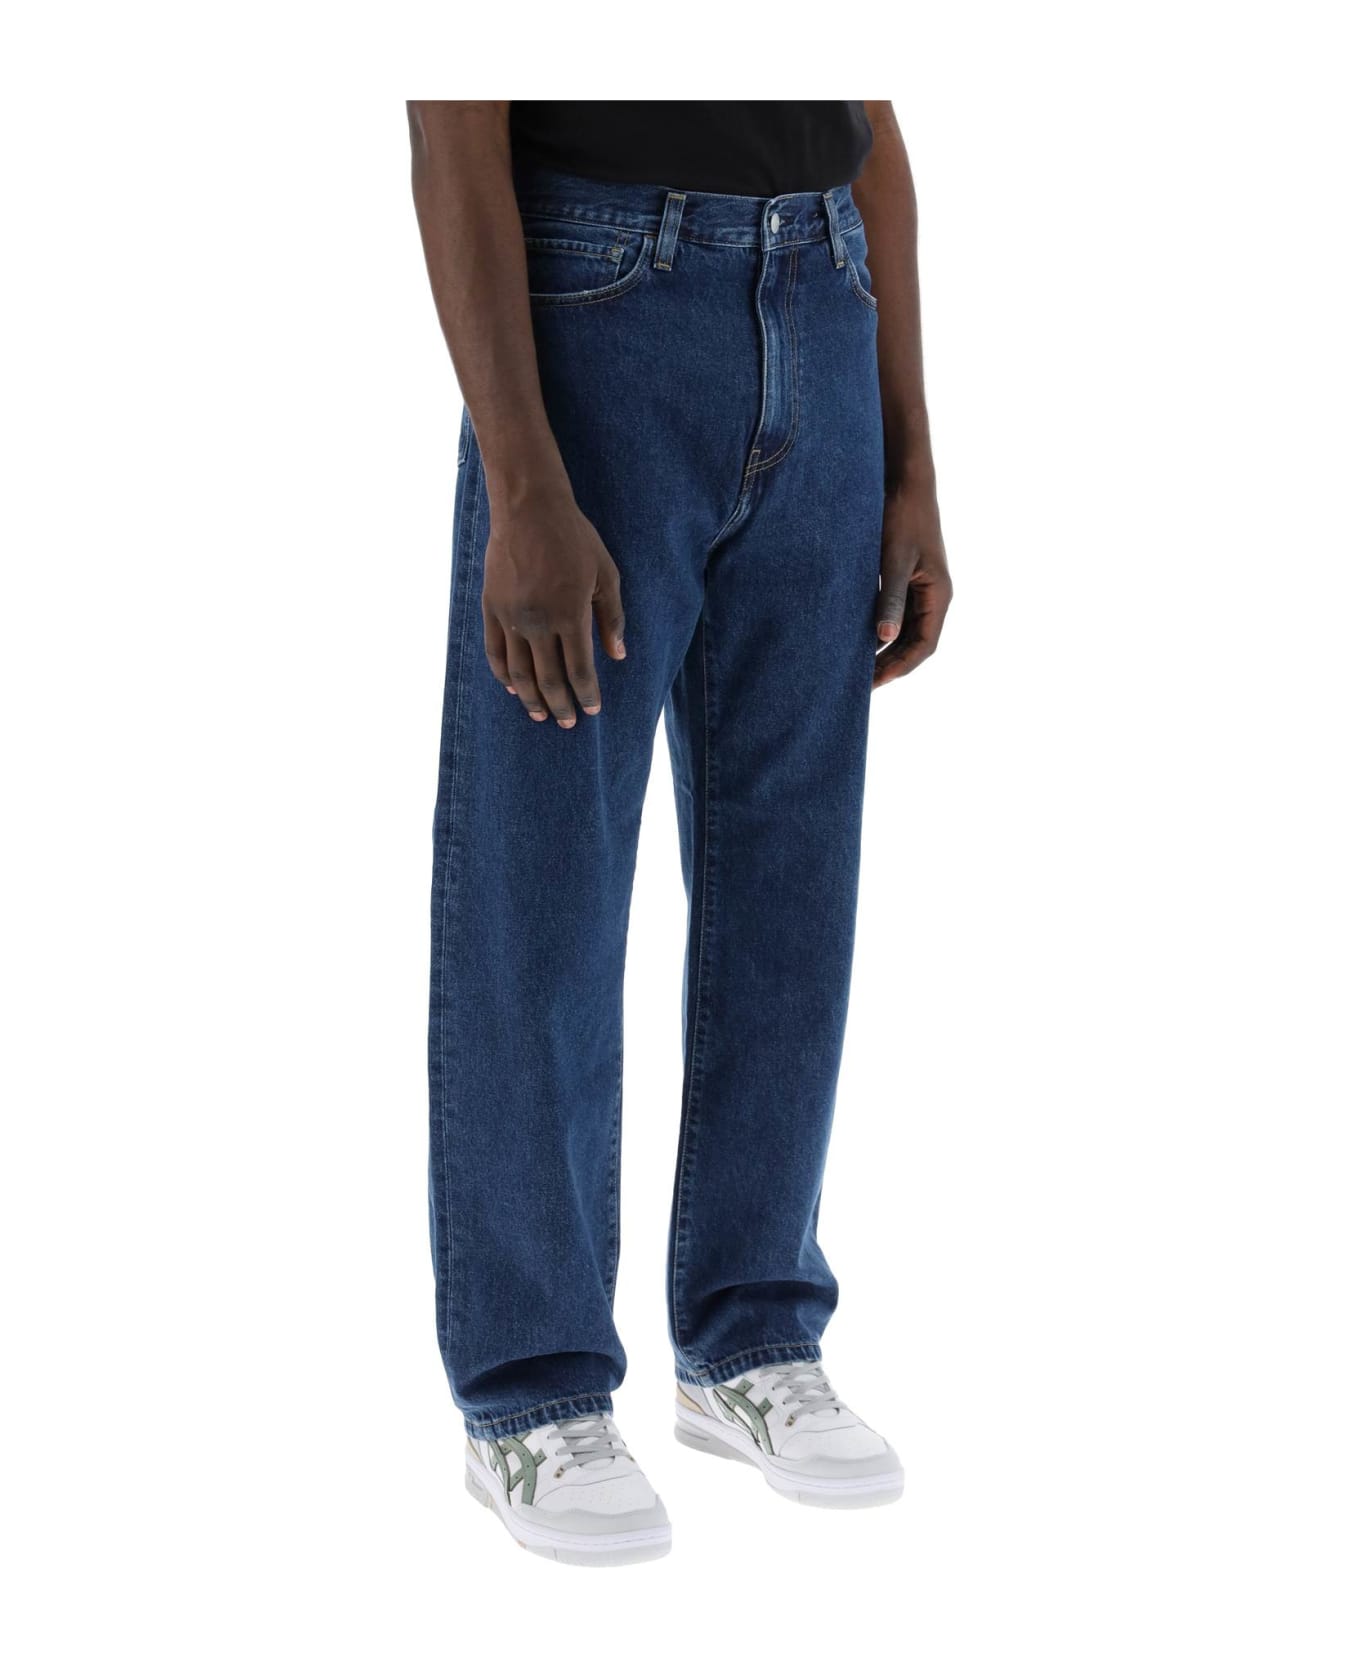 Carhartt Landon Loose Fit Jeans - BLUE (Blue)